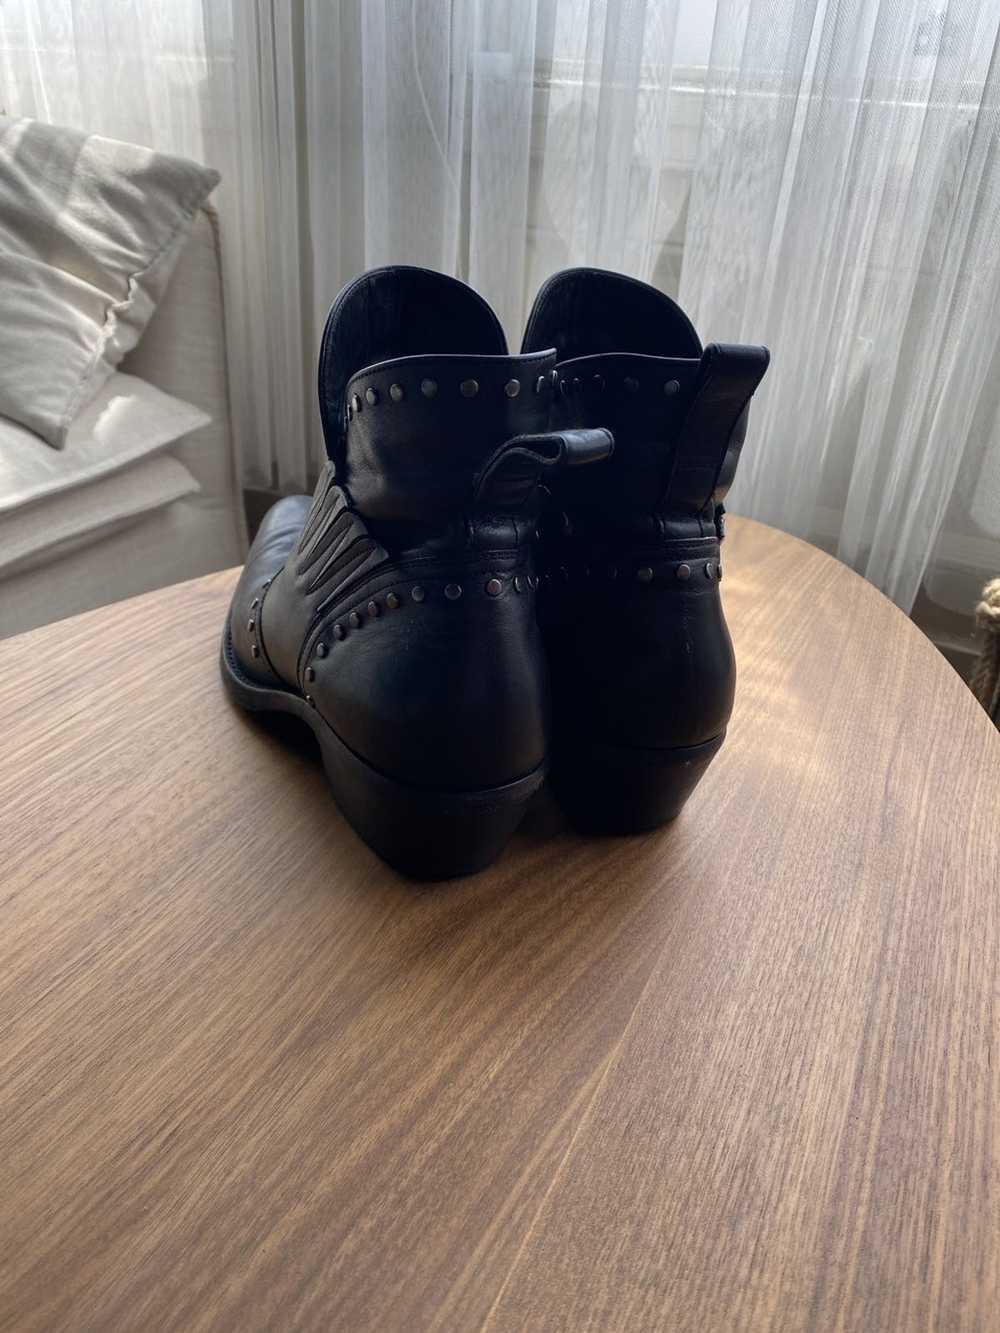 Yves Saint Laurent Kangaroo studded boots - image 3